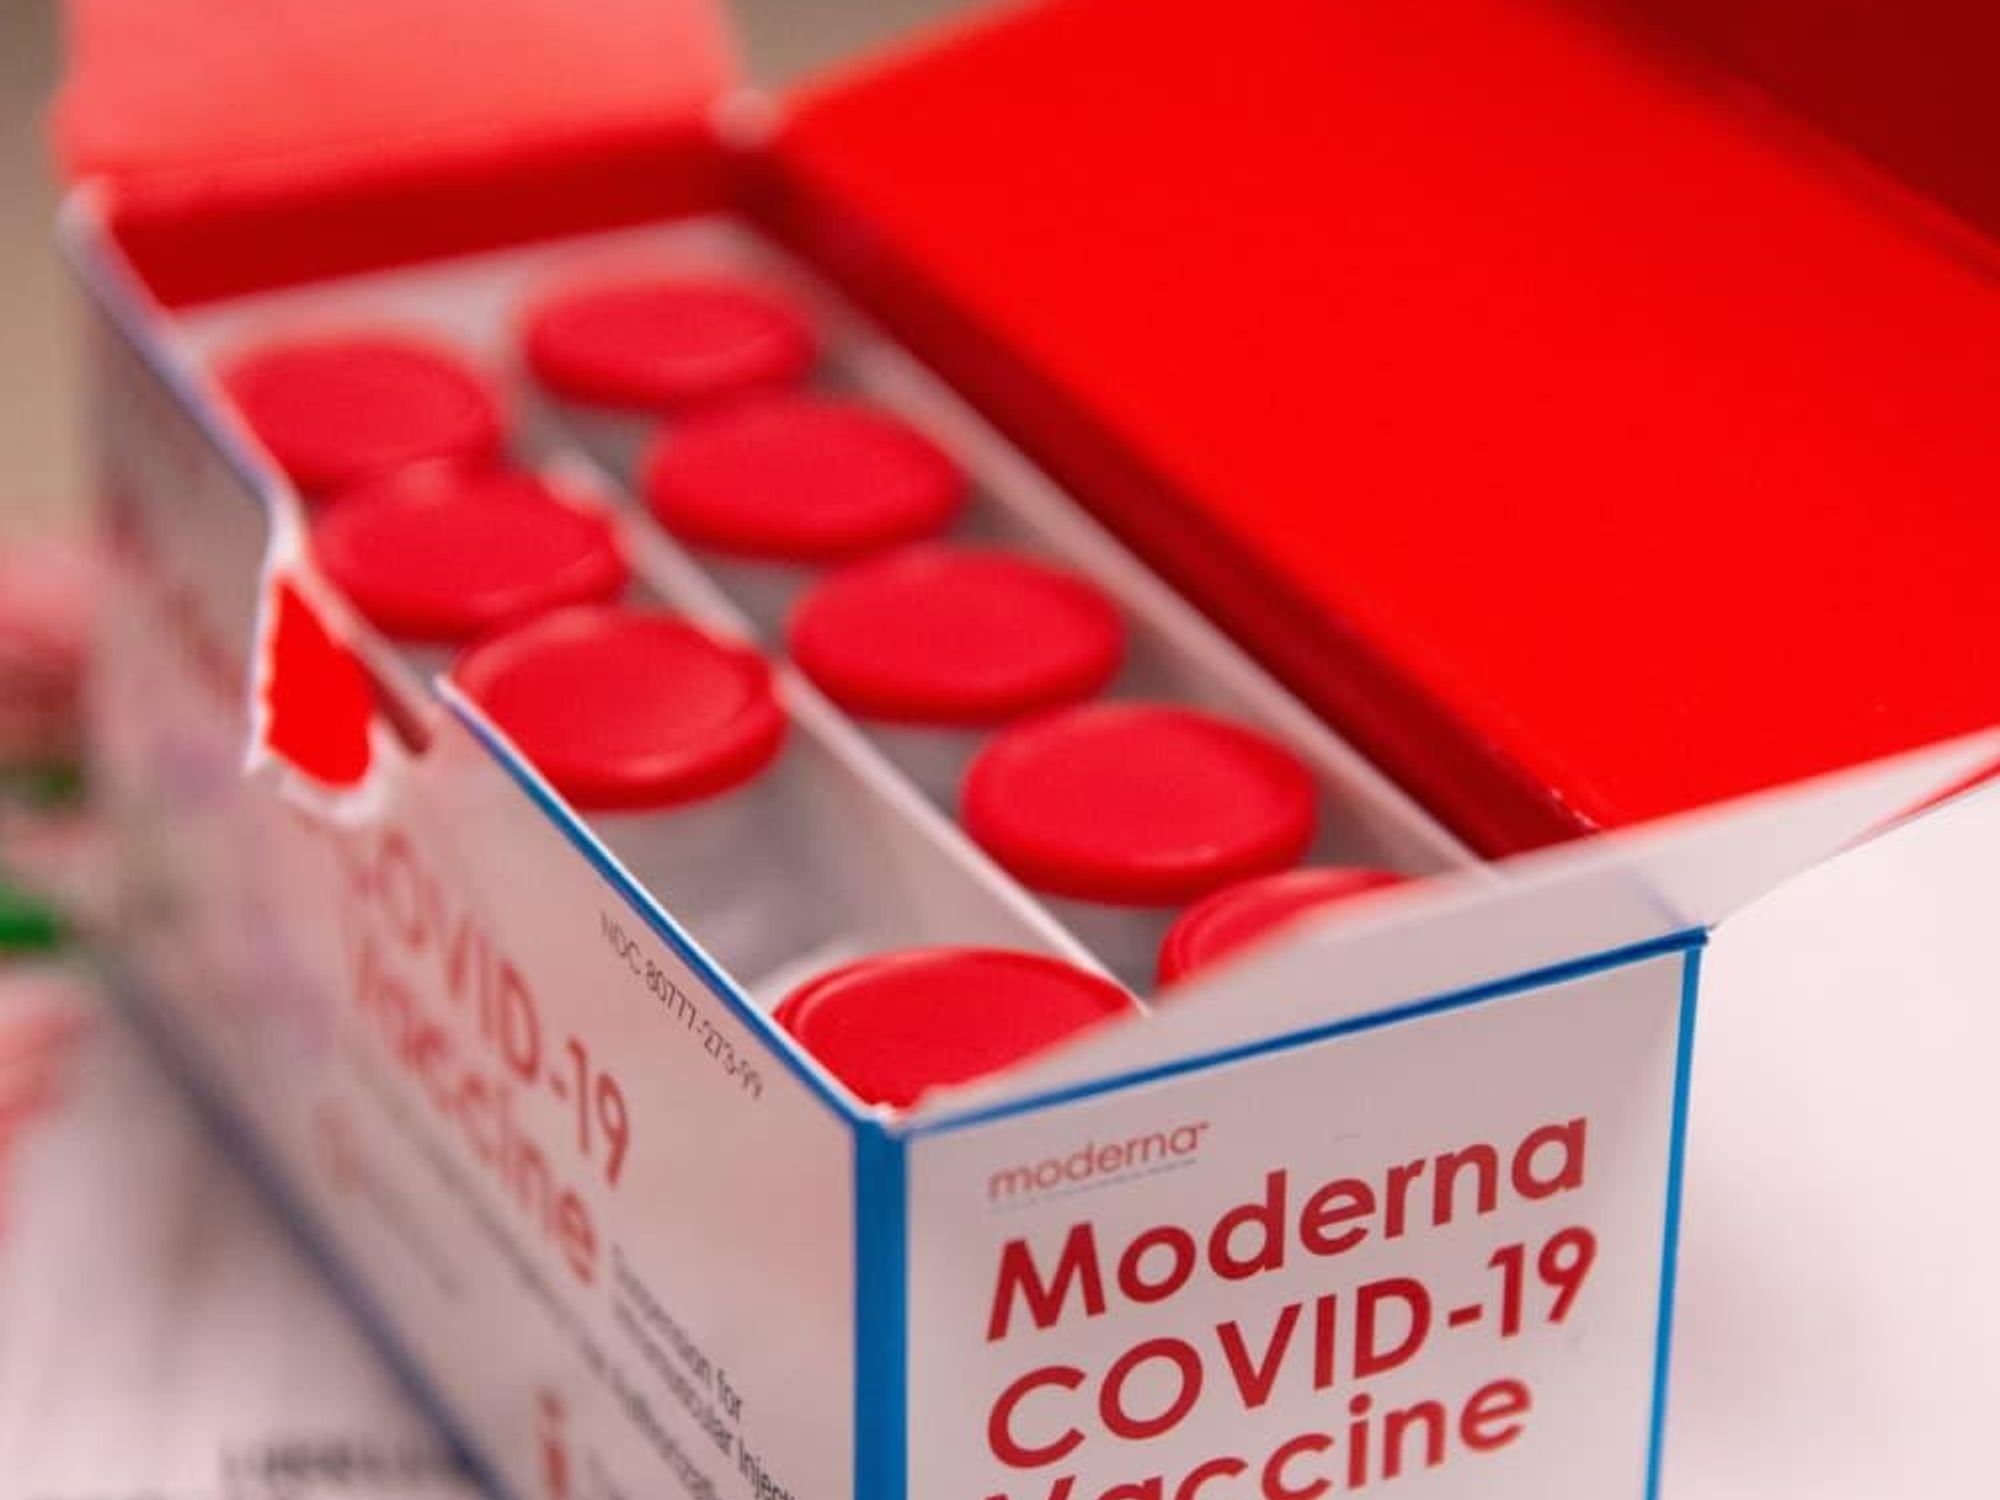 Moderna COVID-19 vaccine box shot doses